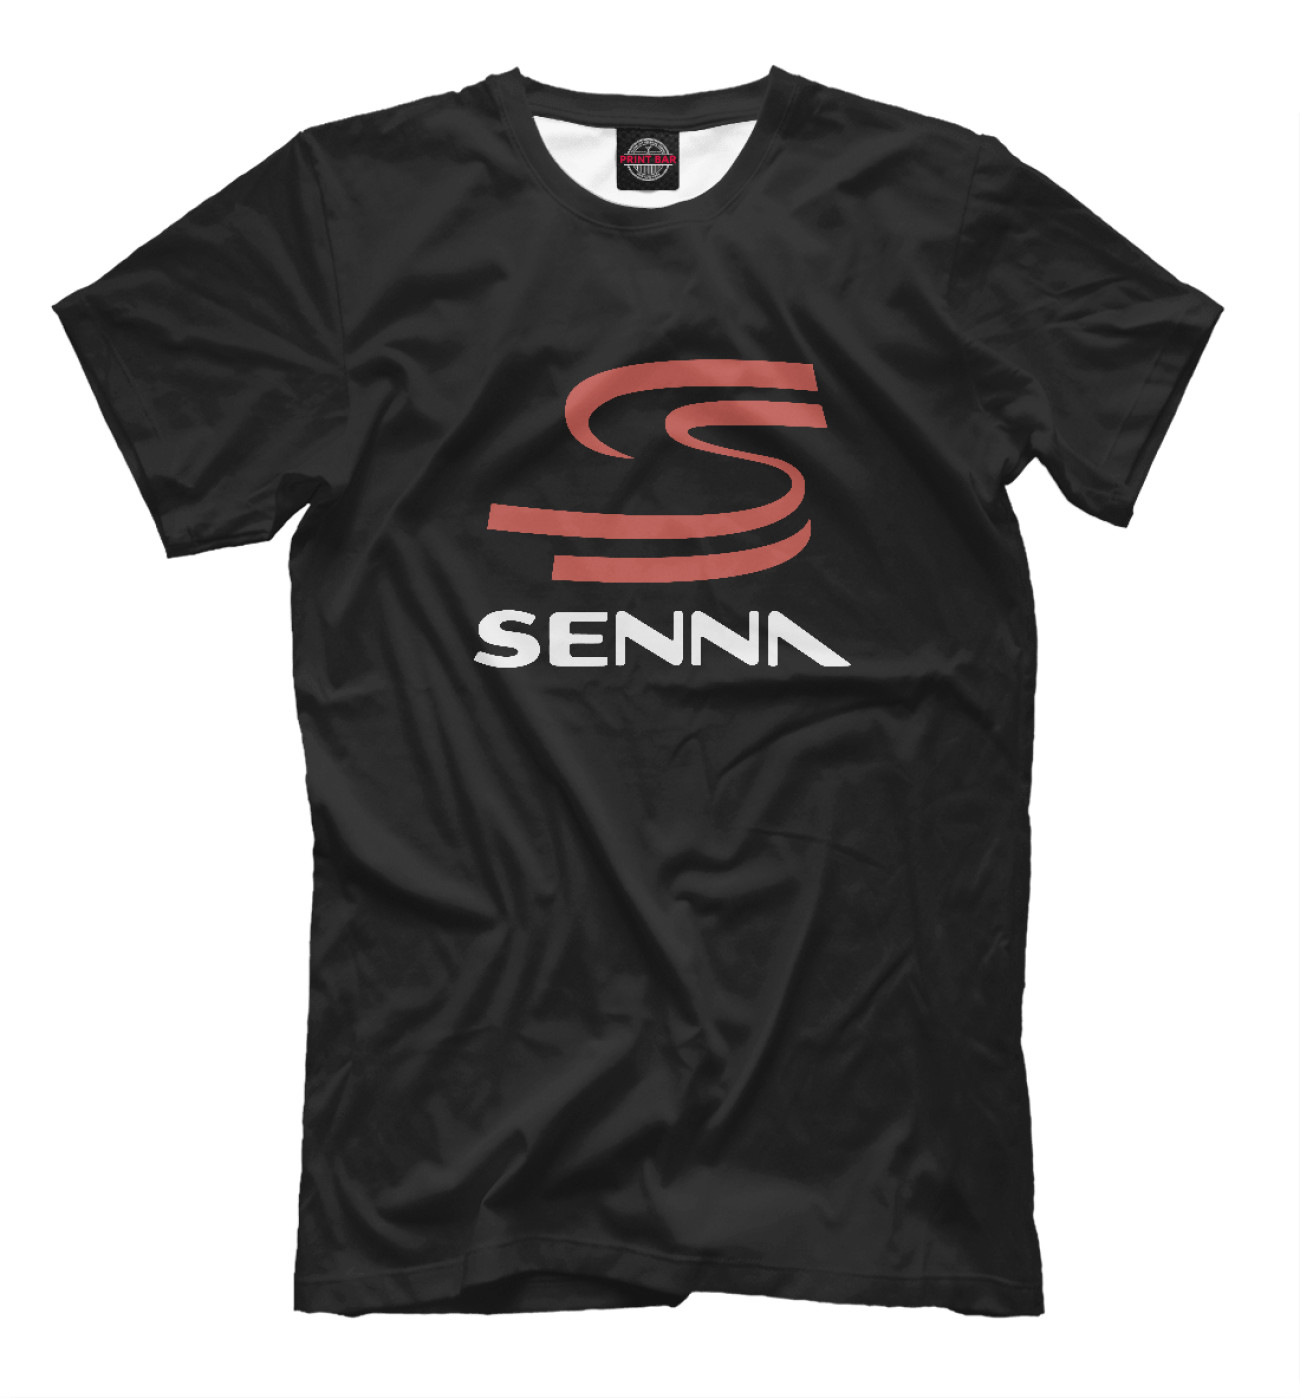 Мужская Футболка Senna, артикул: FR1-965614-fut-2